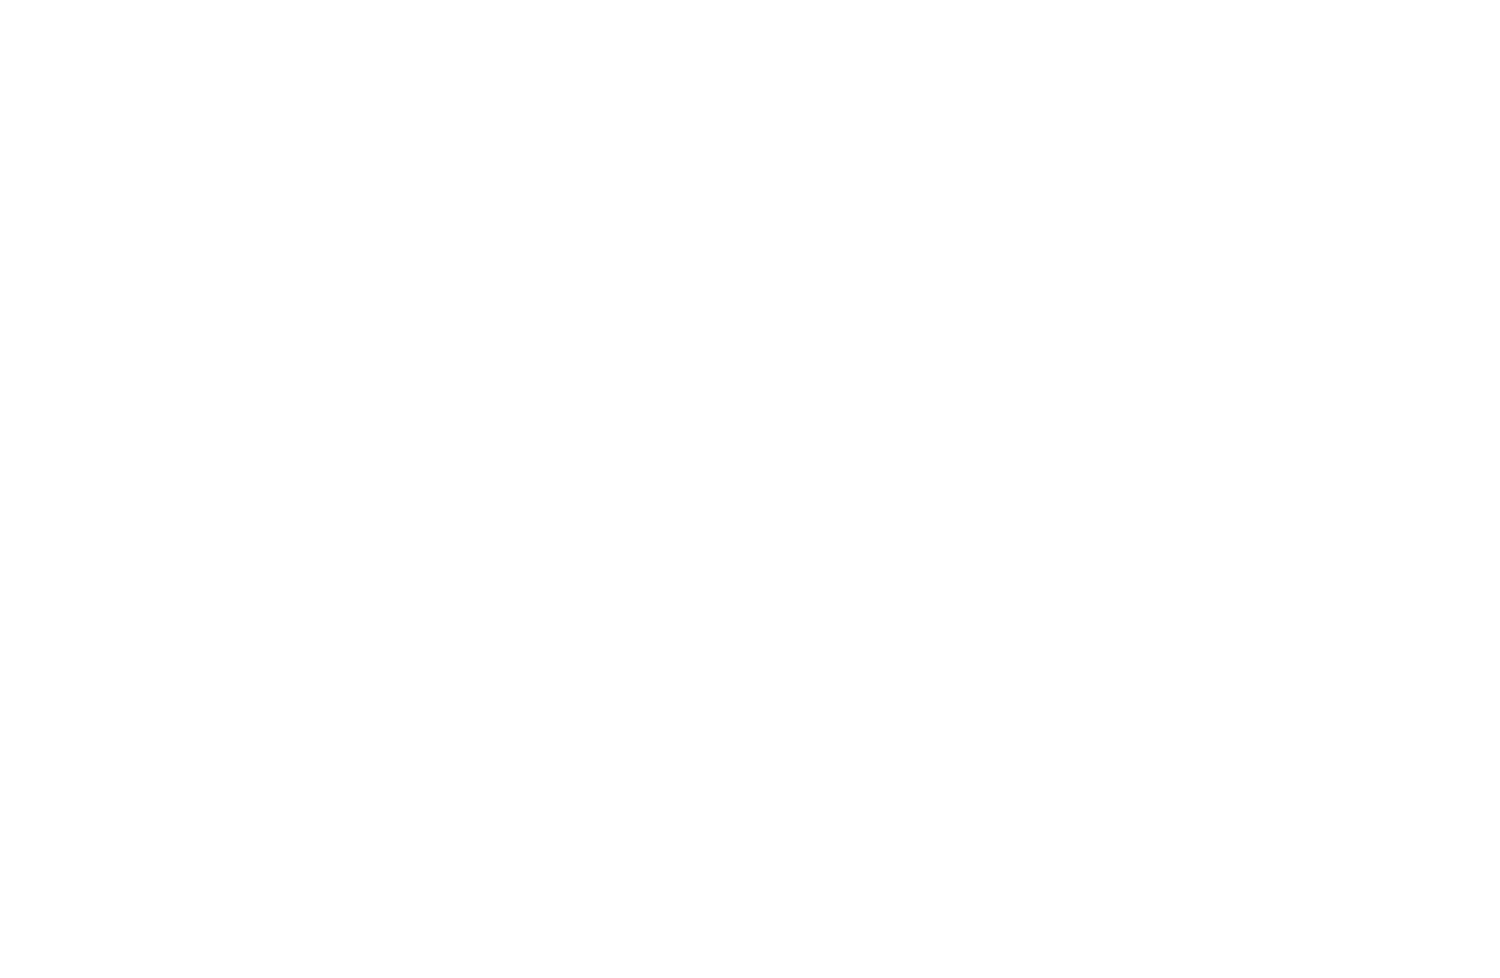 Magnberg